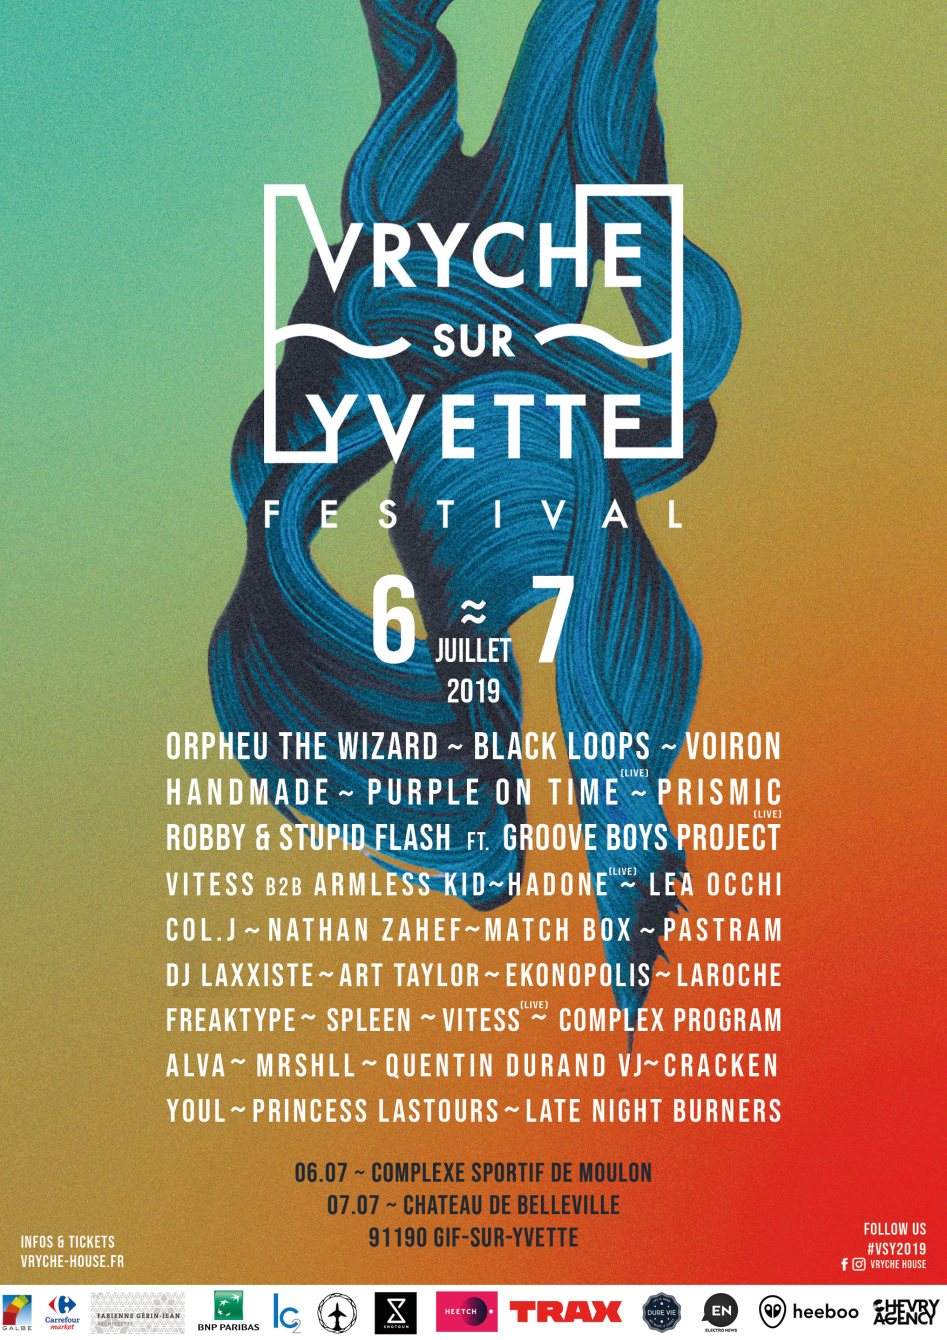 Vryche Sur Yvette Festival - フライヤー裏